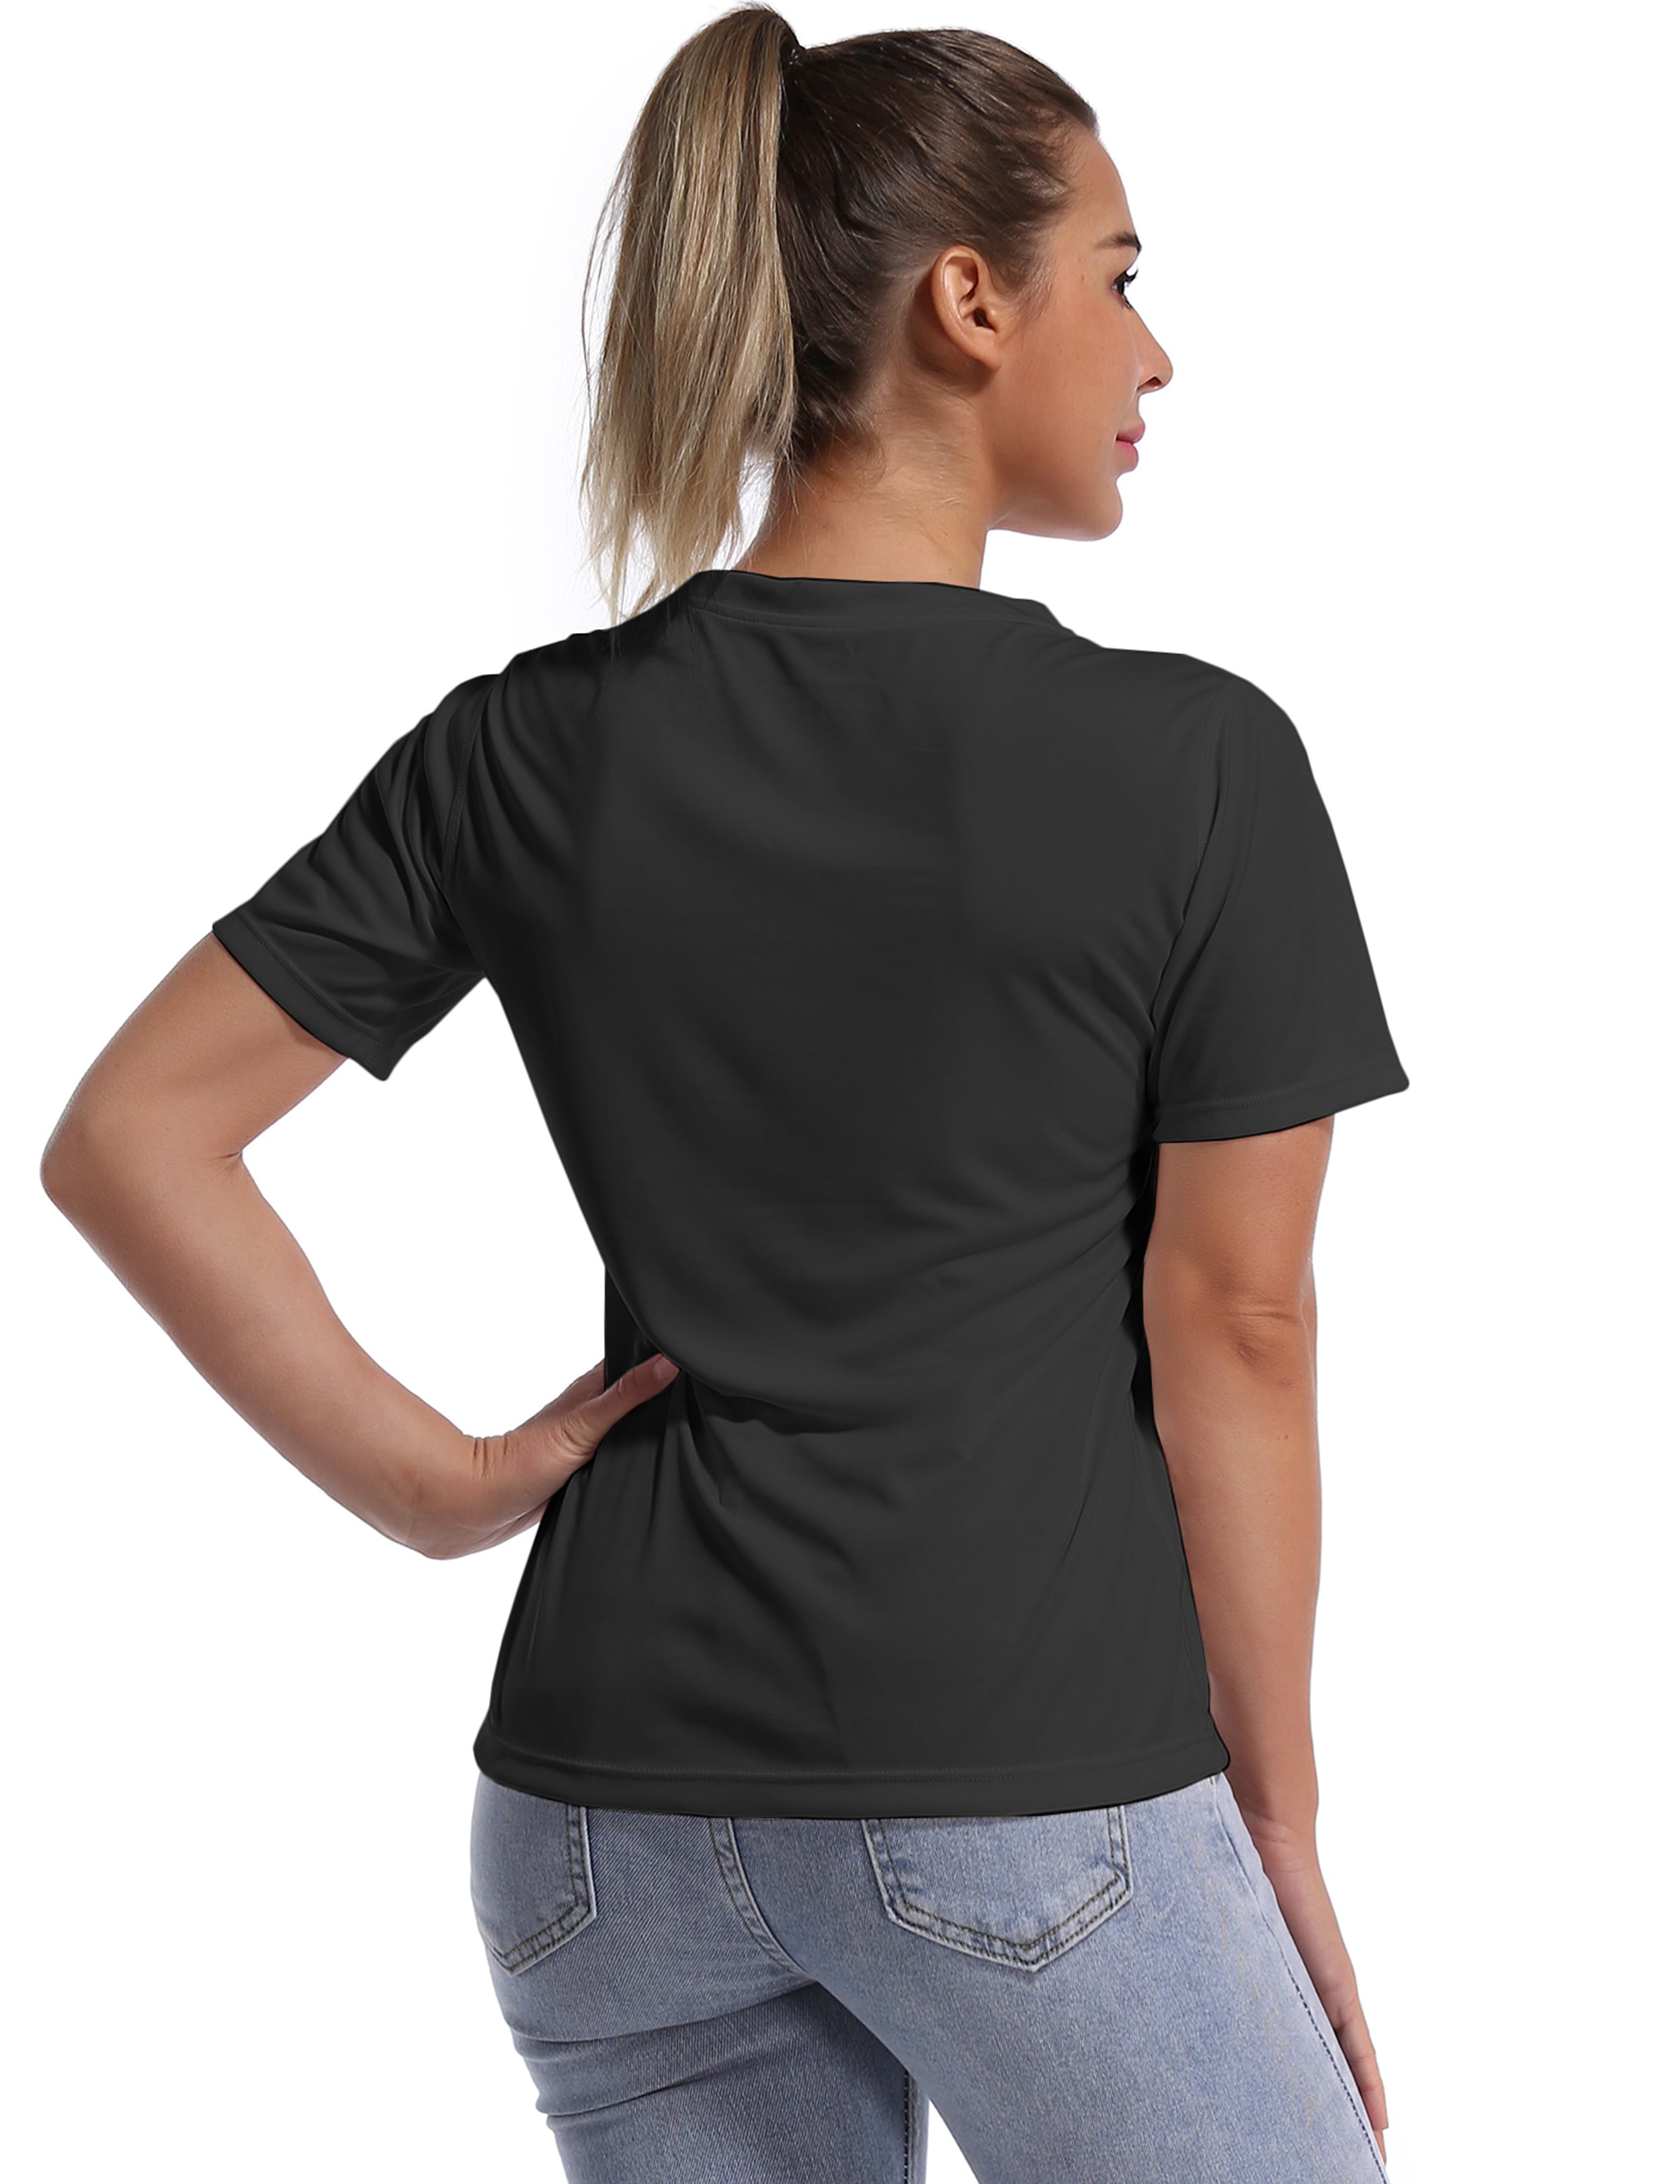 V-Neck Short Sleeve Athletic Shirts black_Running